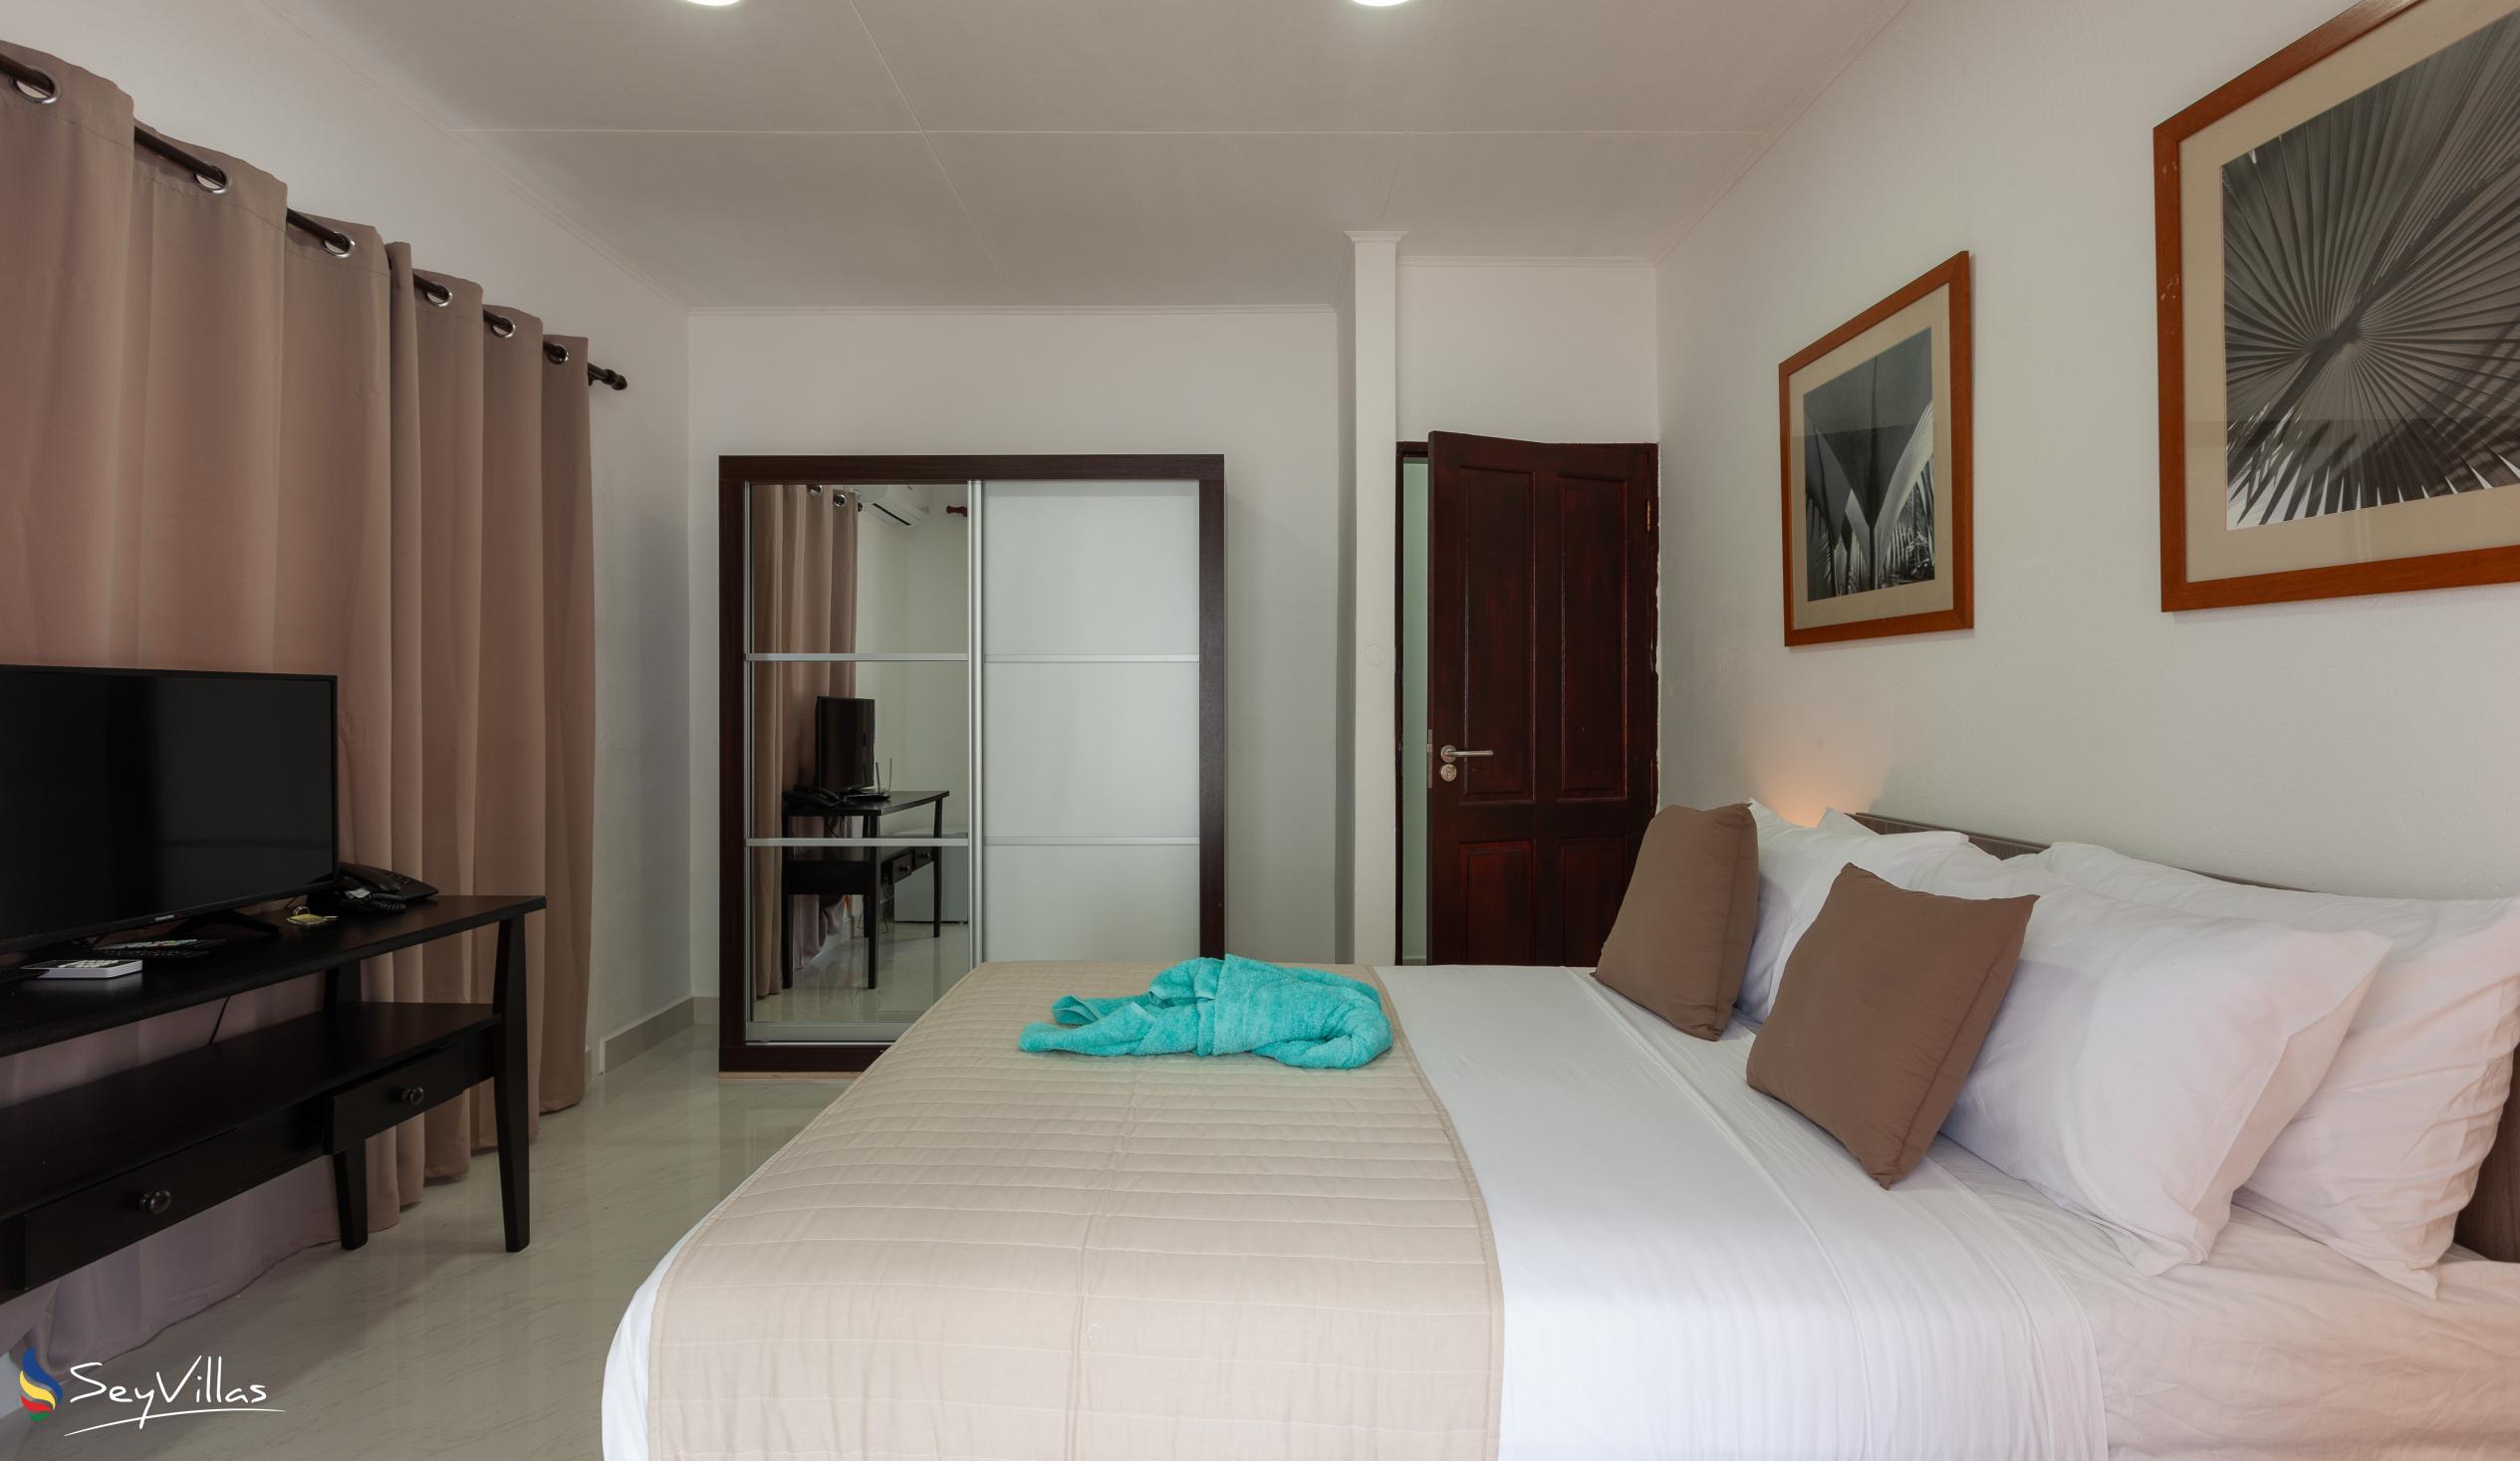 Photo 47: Hotel Plein Soleil - Family Room - Praslin (Seychelles)